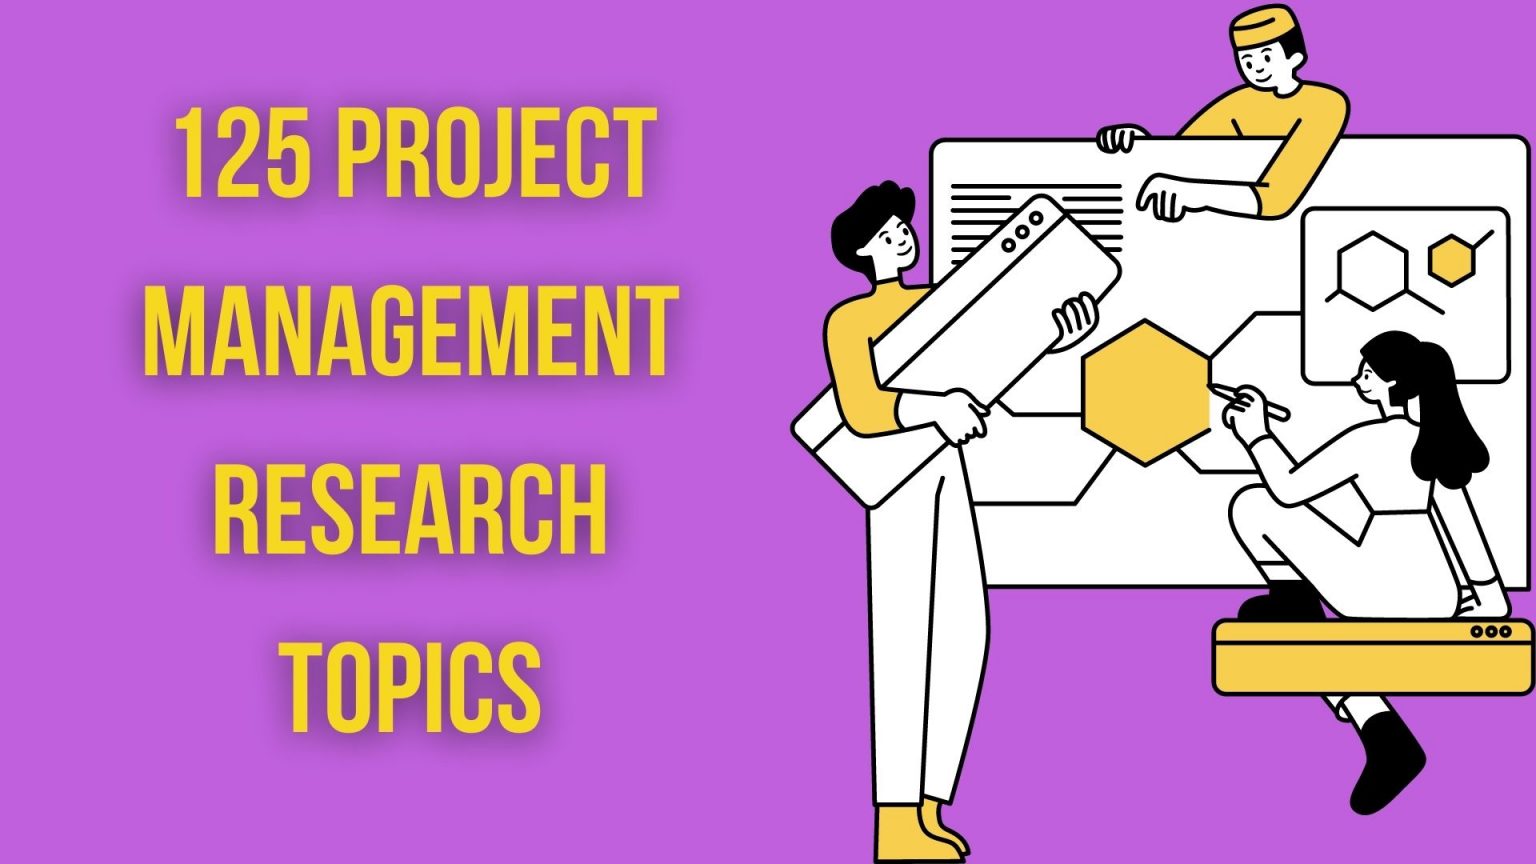 management research topics 2020 pdf